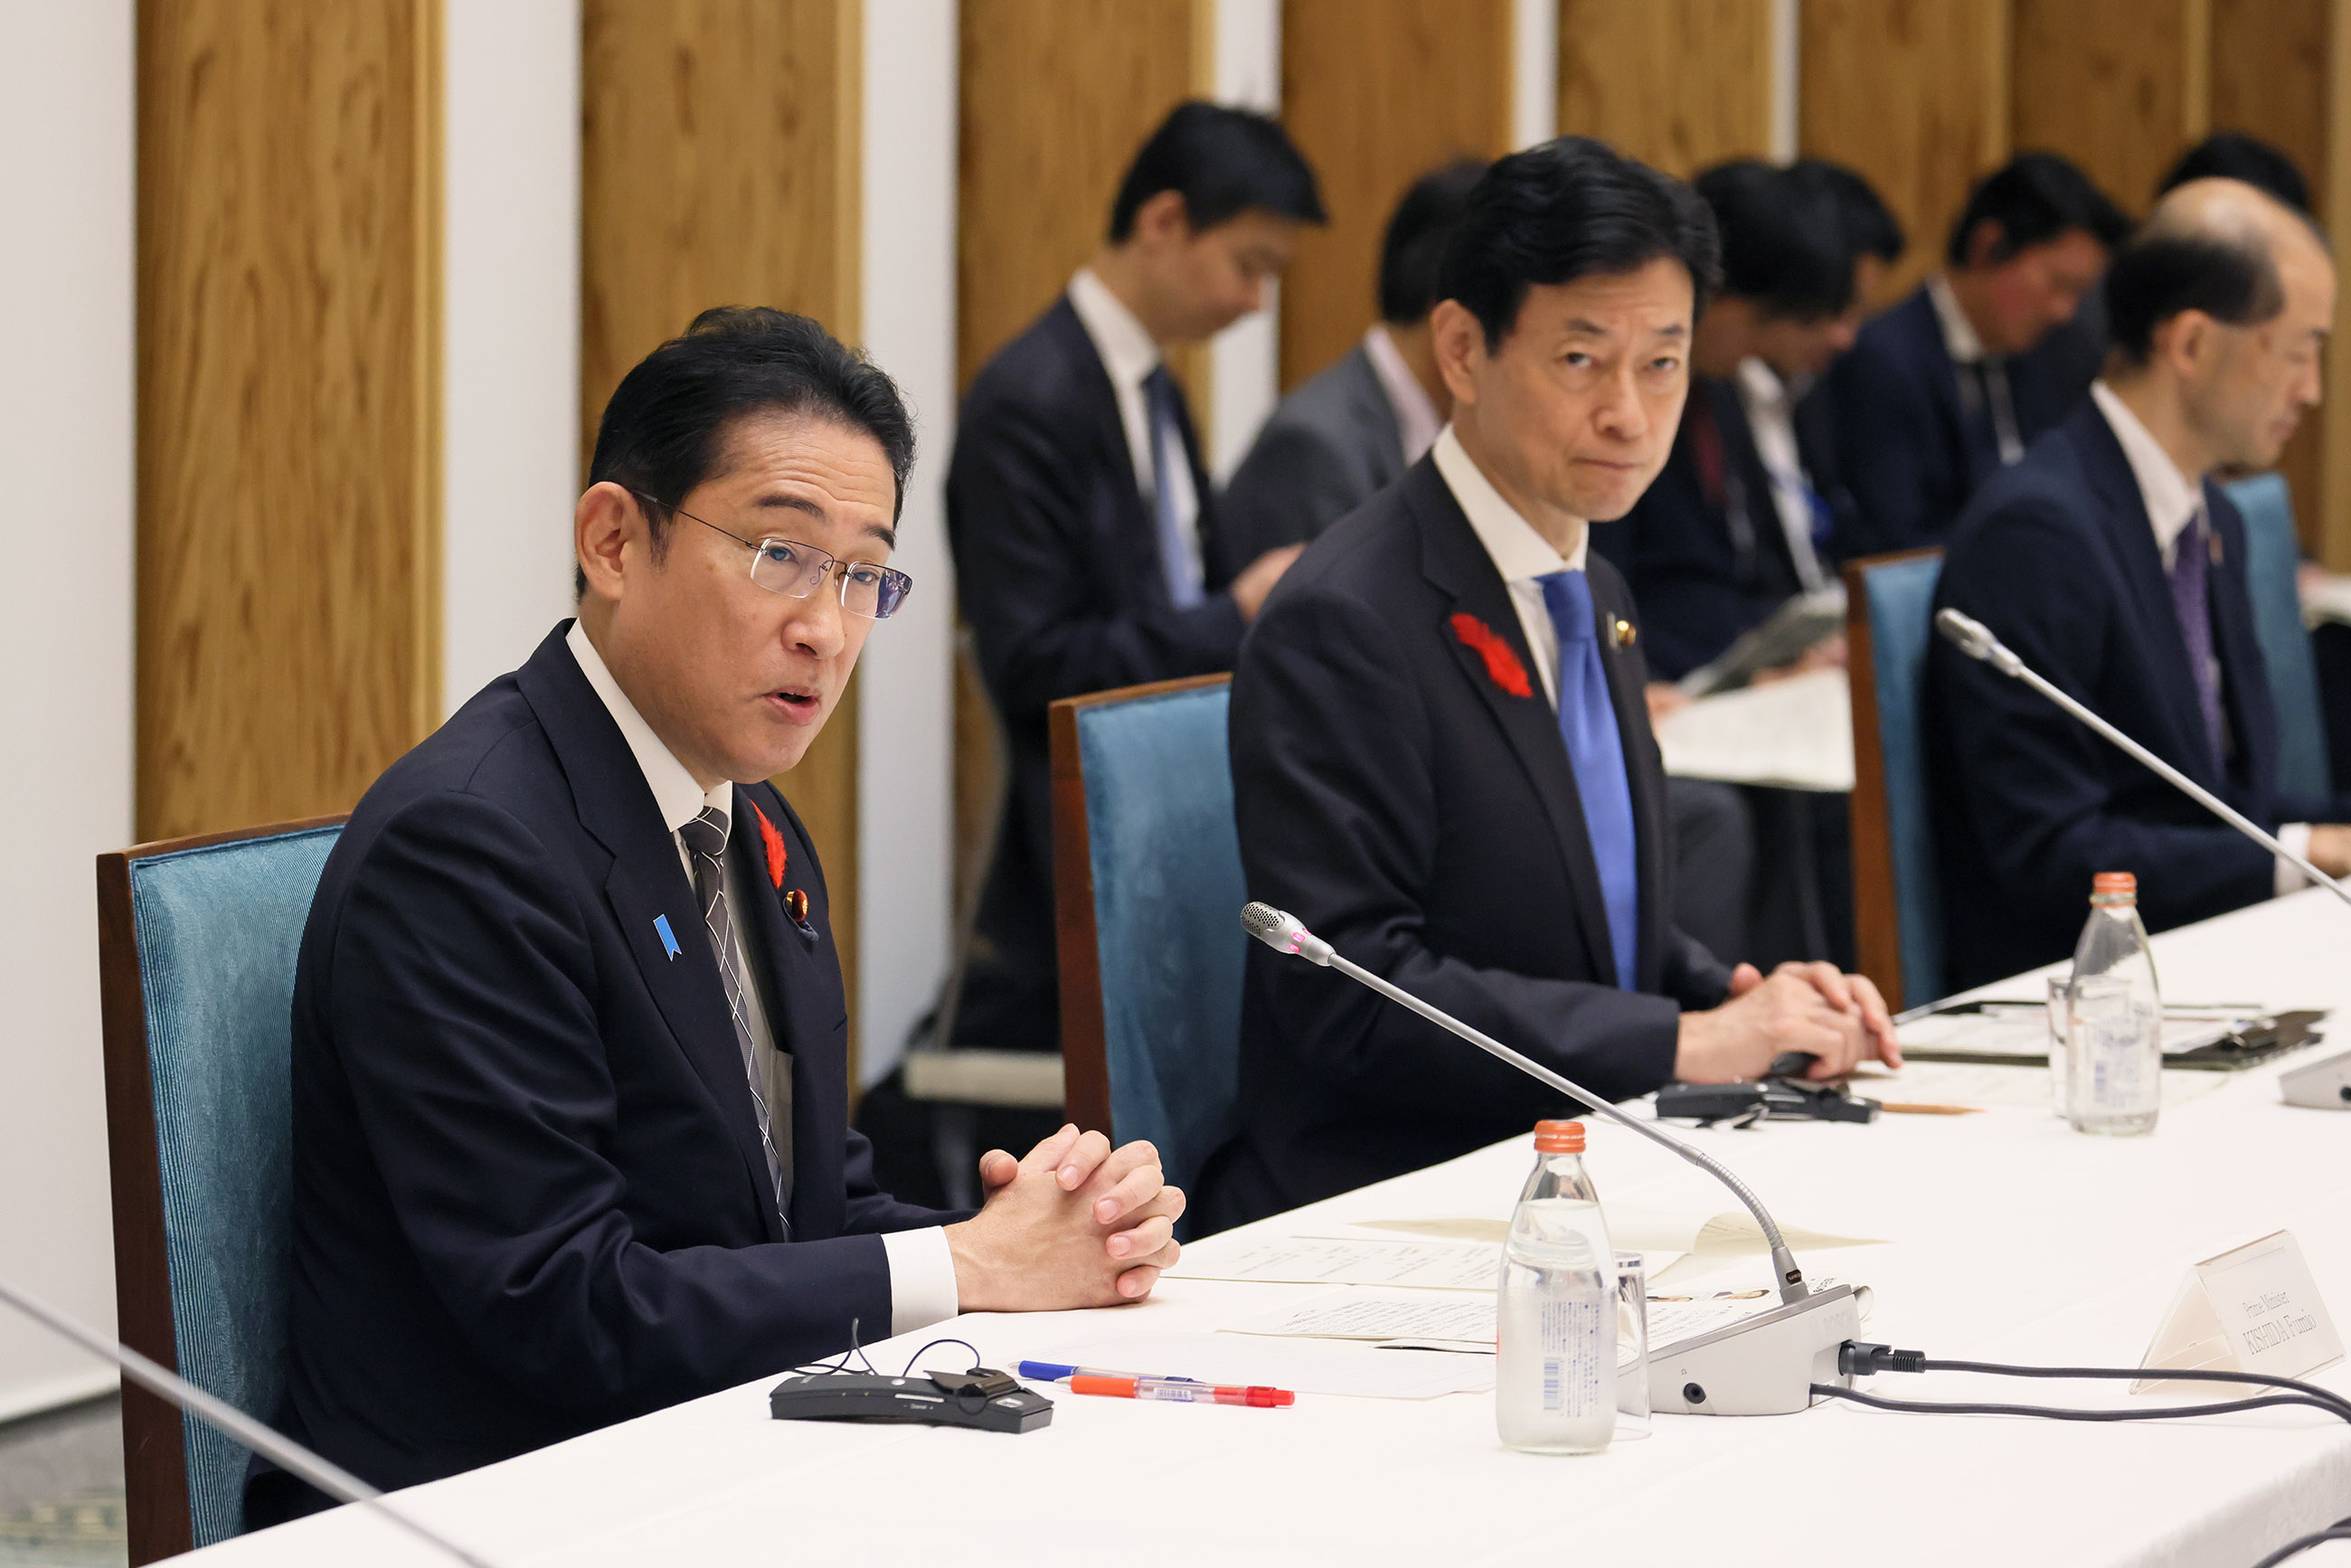 Prime Minister Kishida making a remark